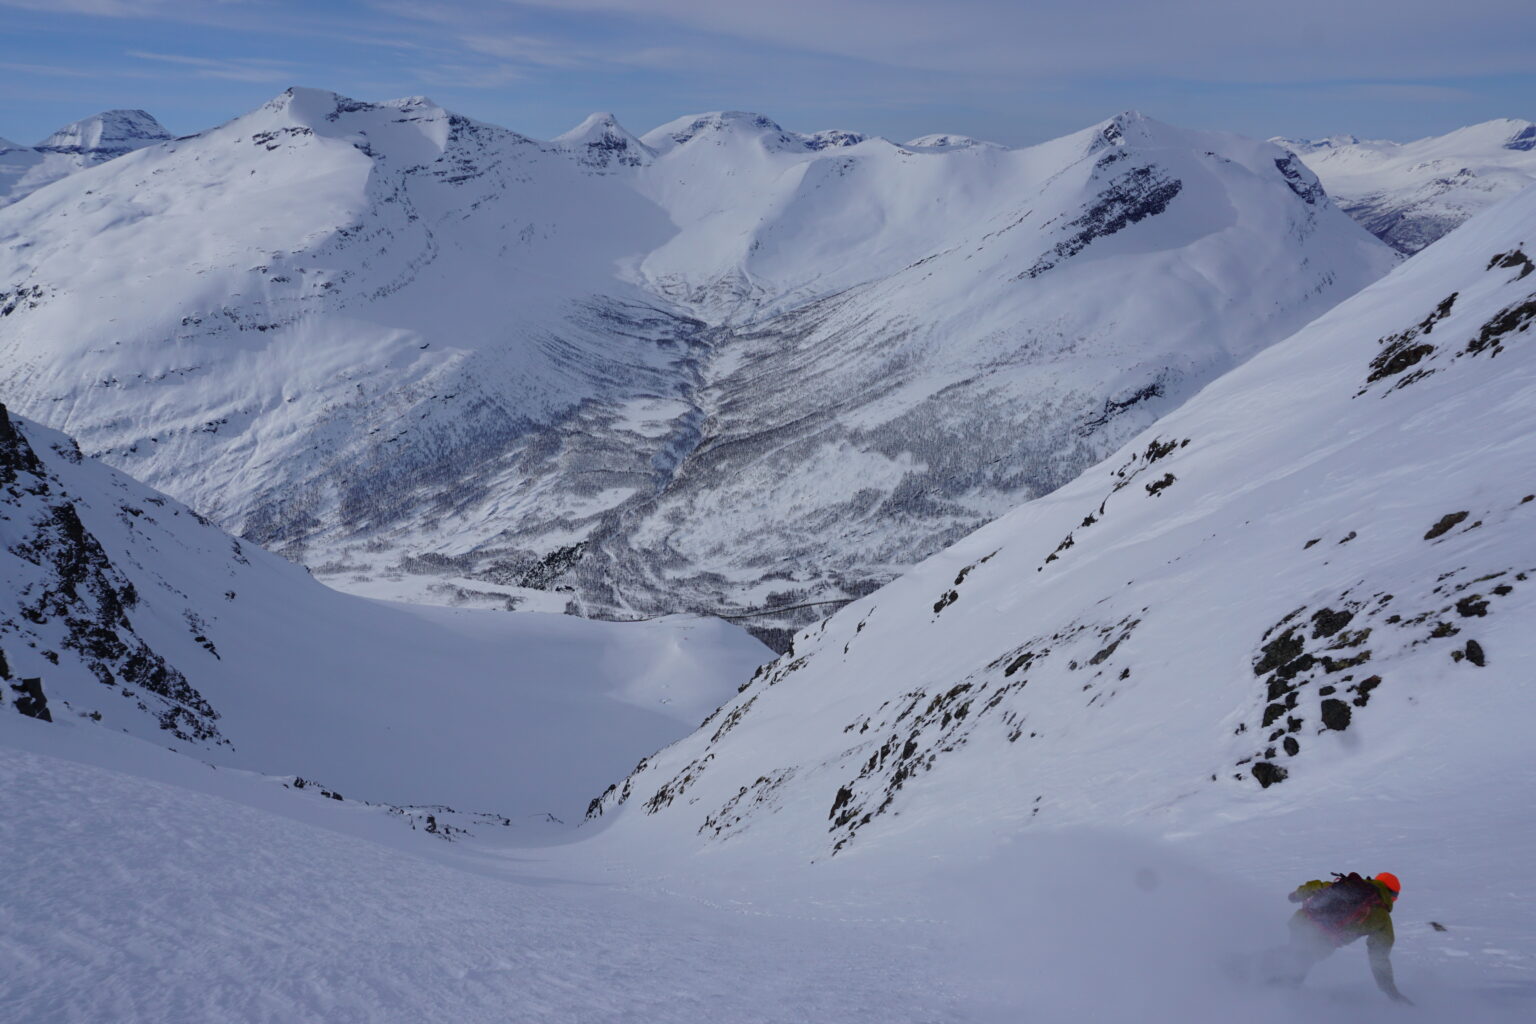 Snowboarding down the Tamokfjellet North chute